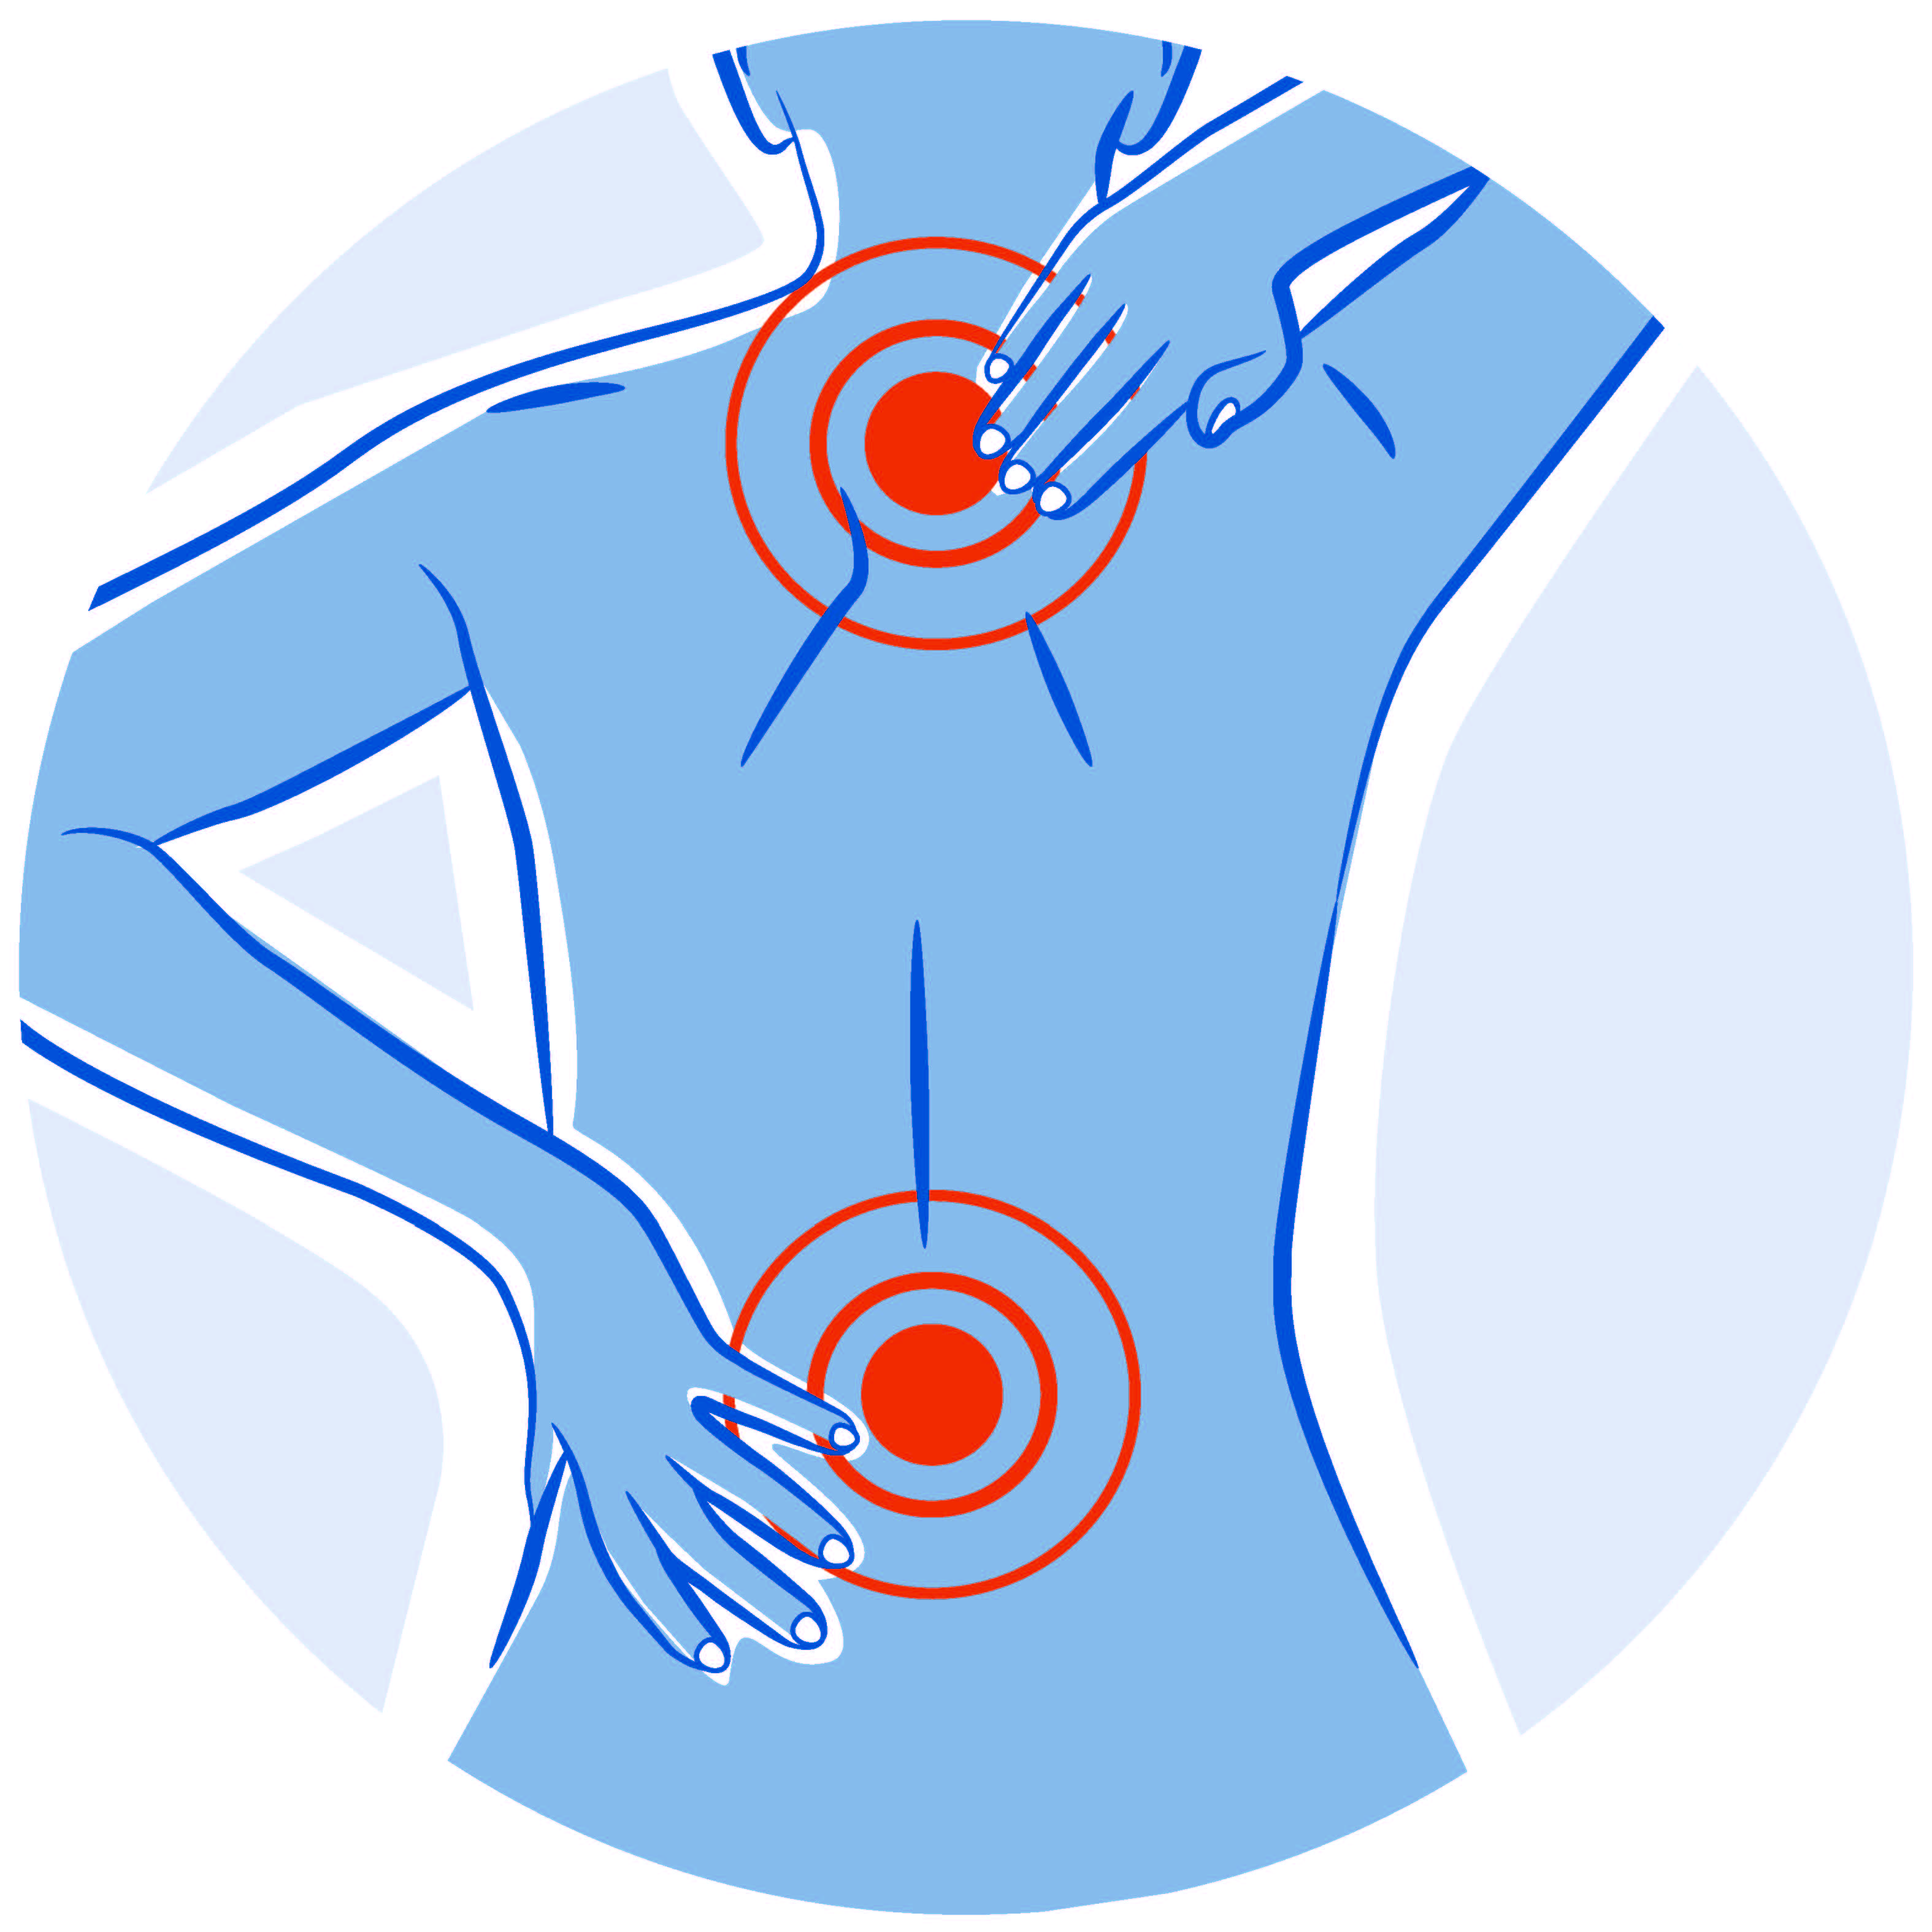 Patientenforum: Rückenschmerzen